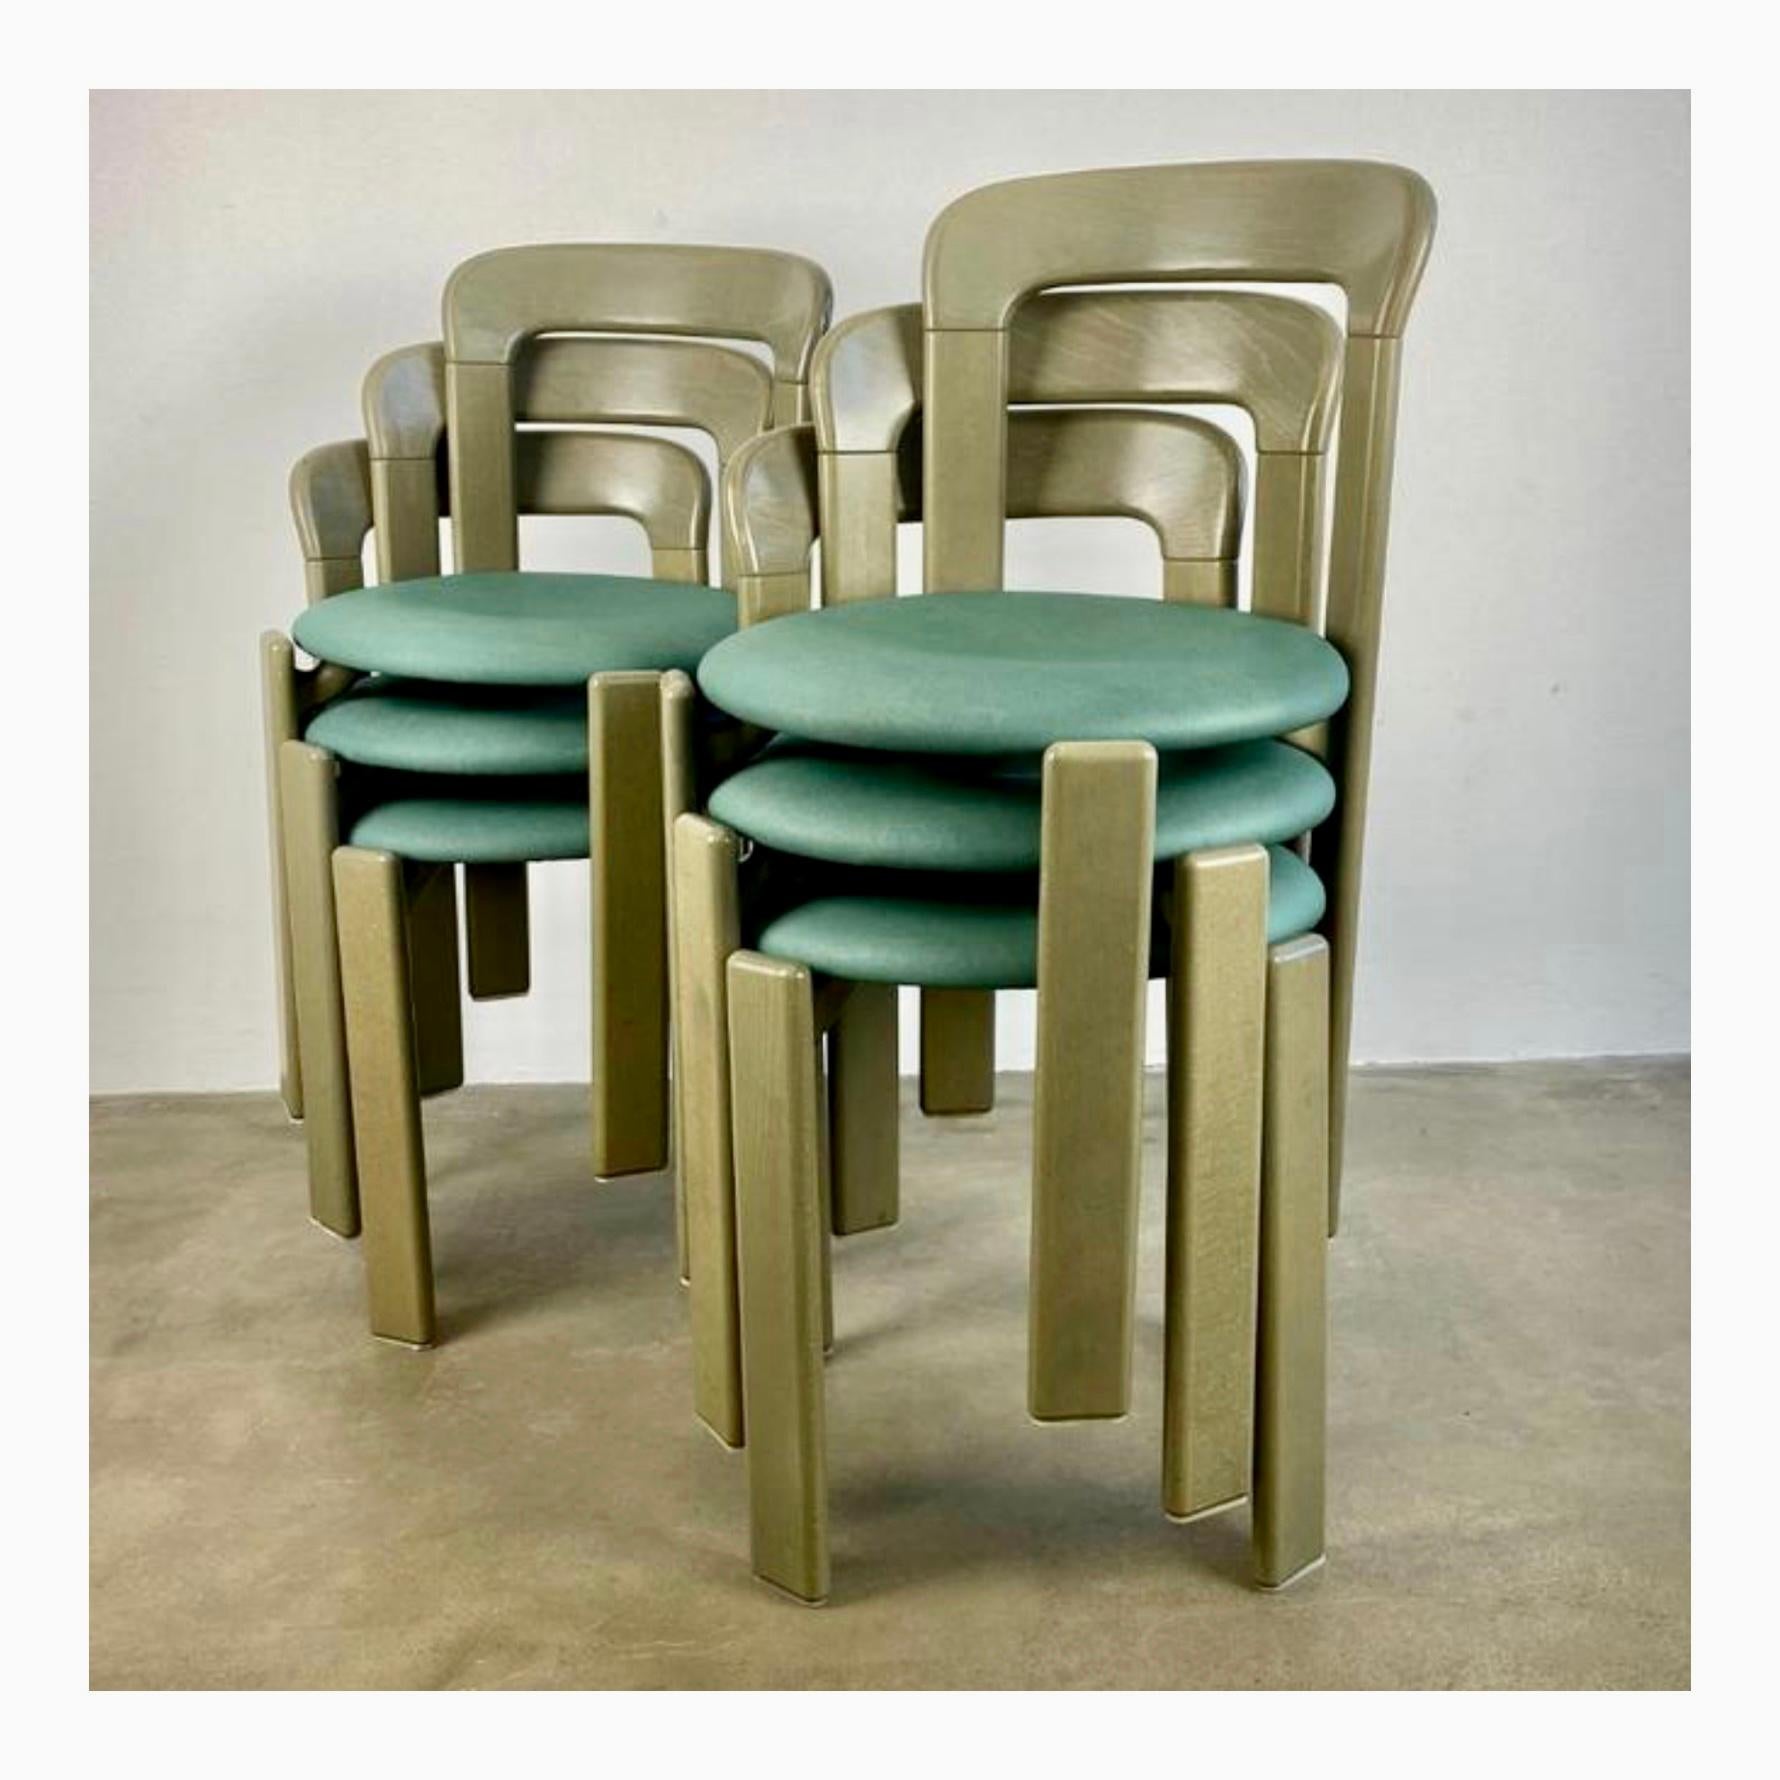 Late 20th Century Vintage Green Chair by Bruno Rey for Dietiker, Switzerland, 1970s